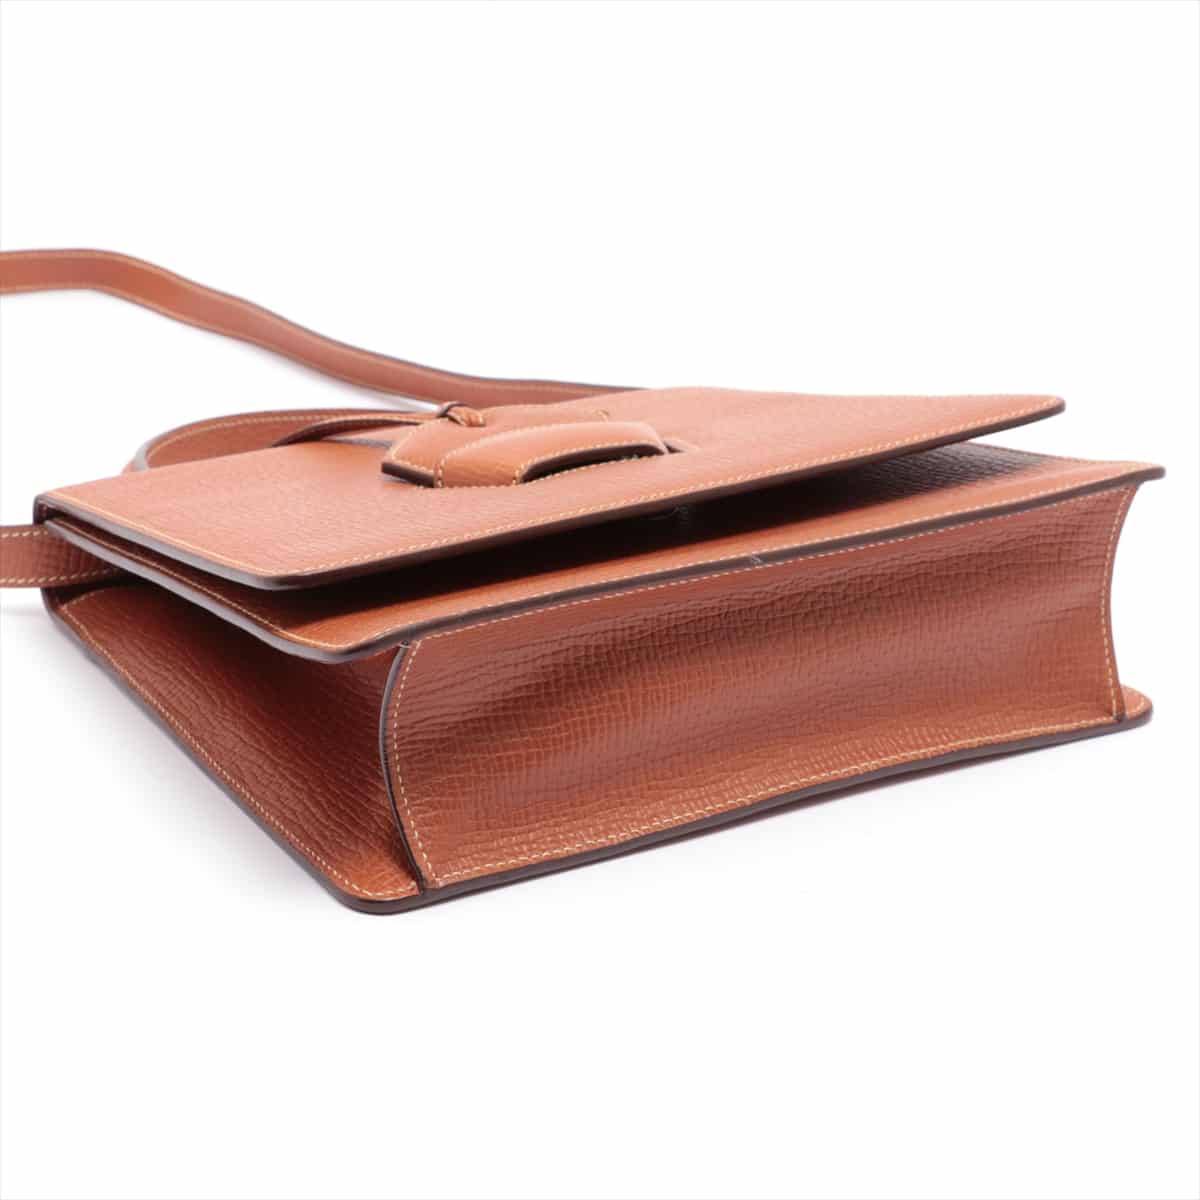 Loewe Barcelona Leather 2way handbag Brown